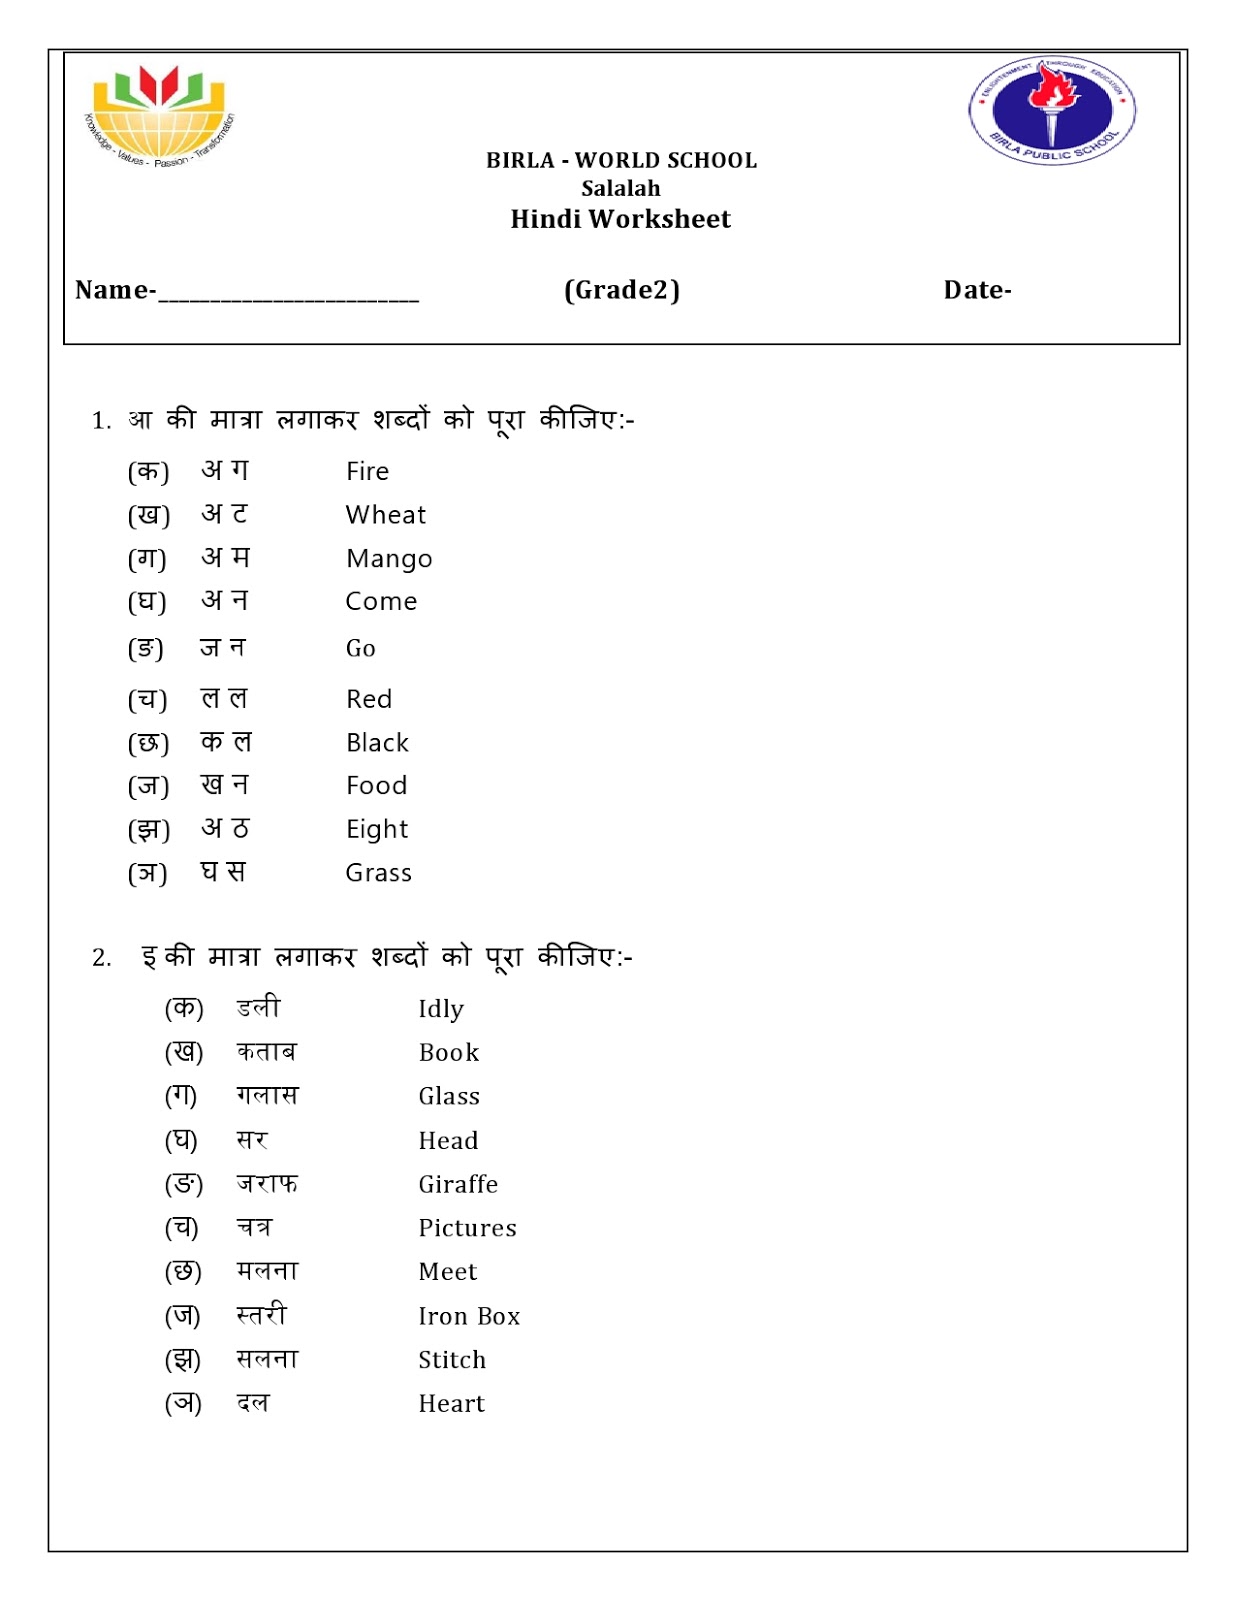 i-ki-matra-hindi-workbook-for-grade-1-estudynotes-free-printable